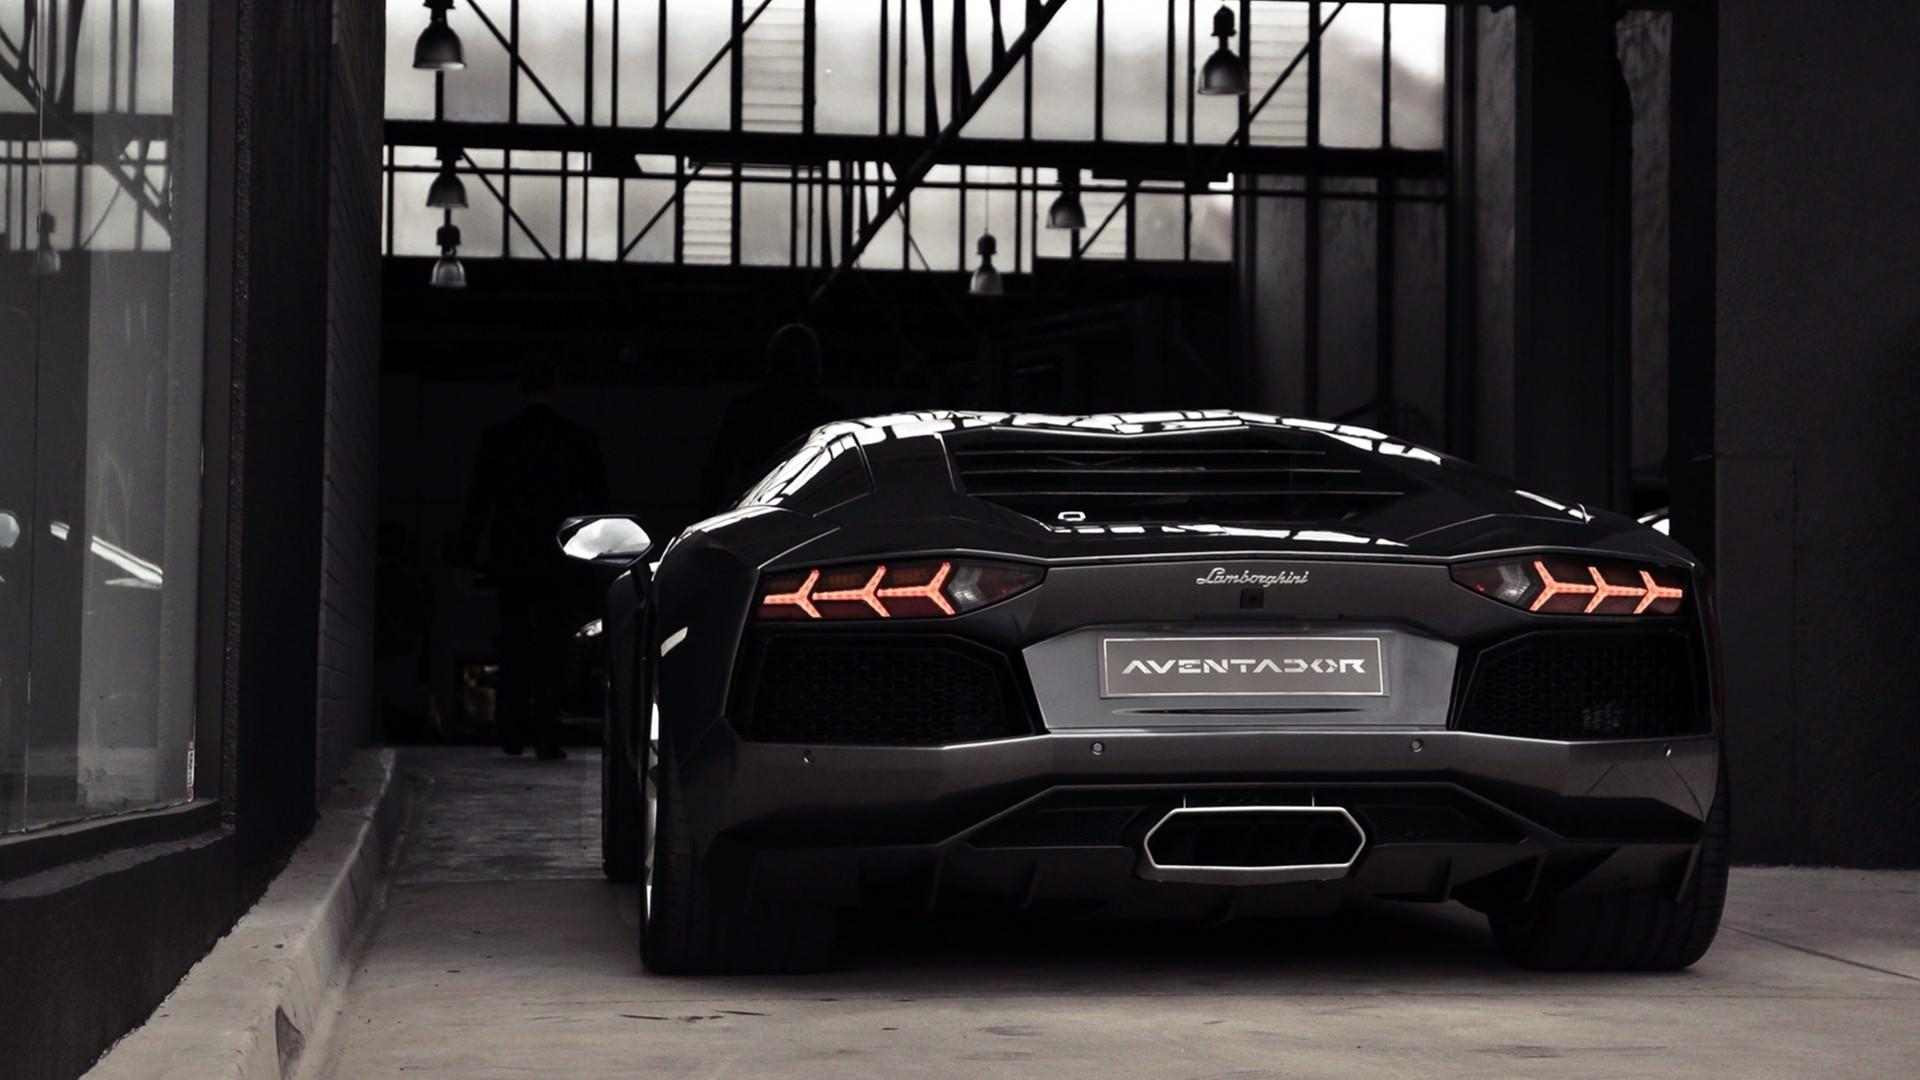 Black Color Lamborghini Aventador LP 700 4 Wallpaper Rear View